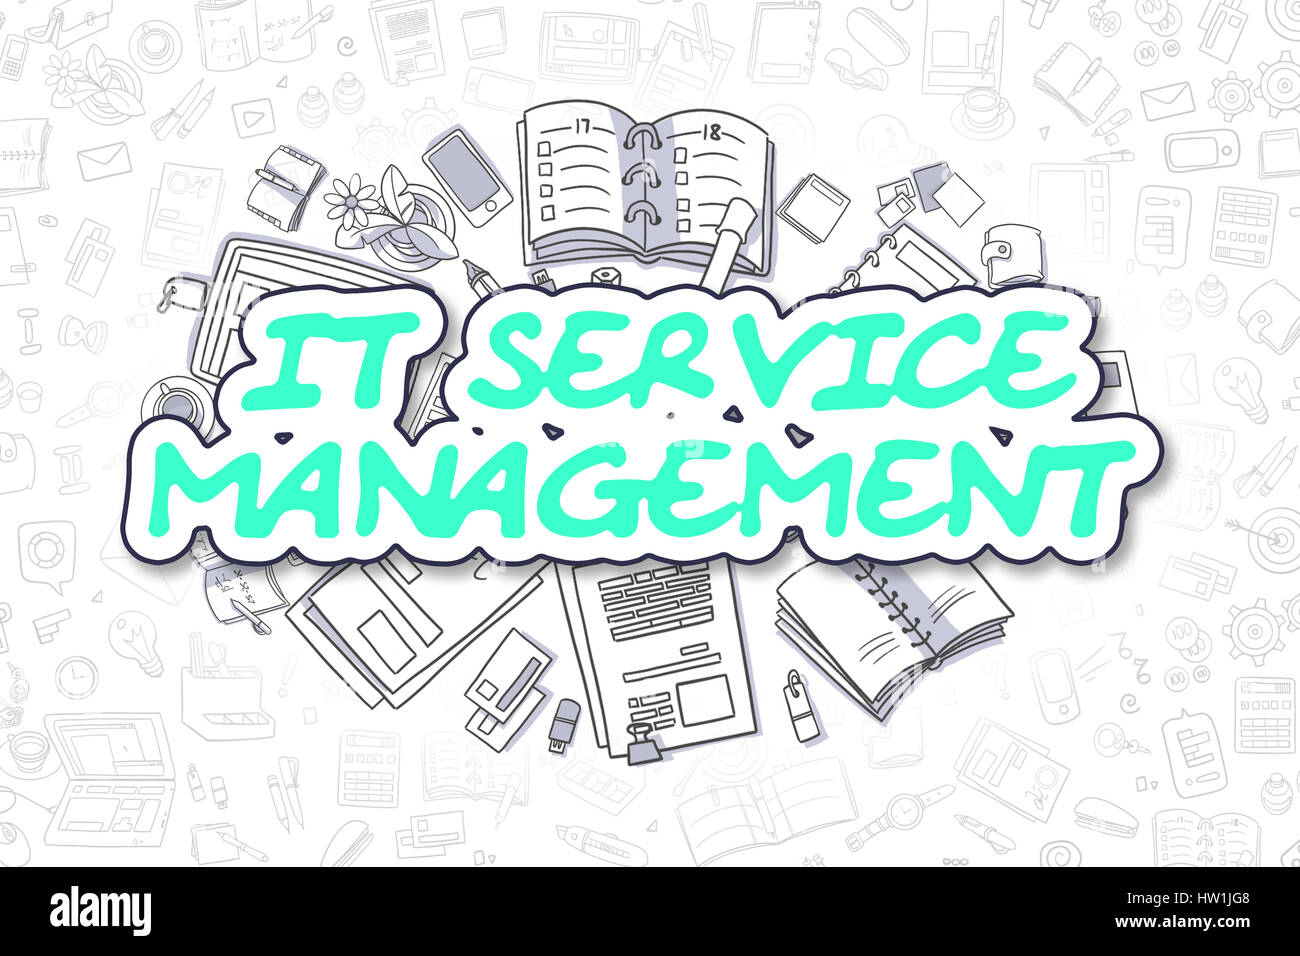 IT Service Management - Doodle Green Text. Business Concept. Stock Photo